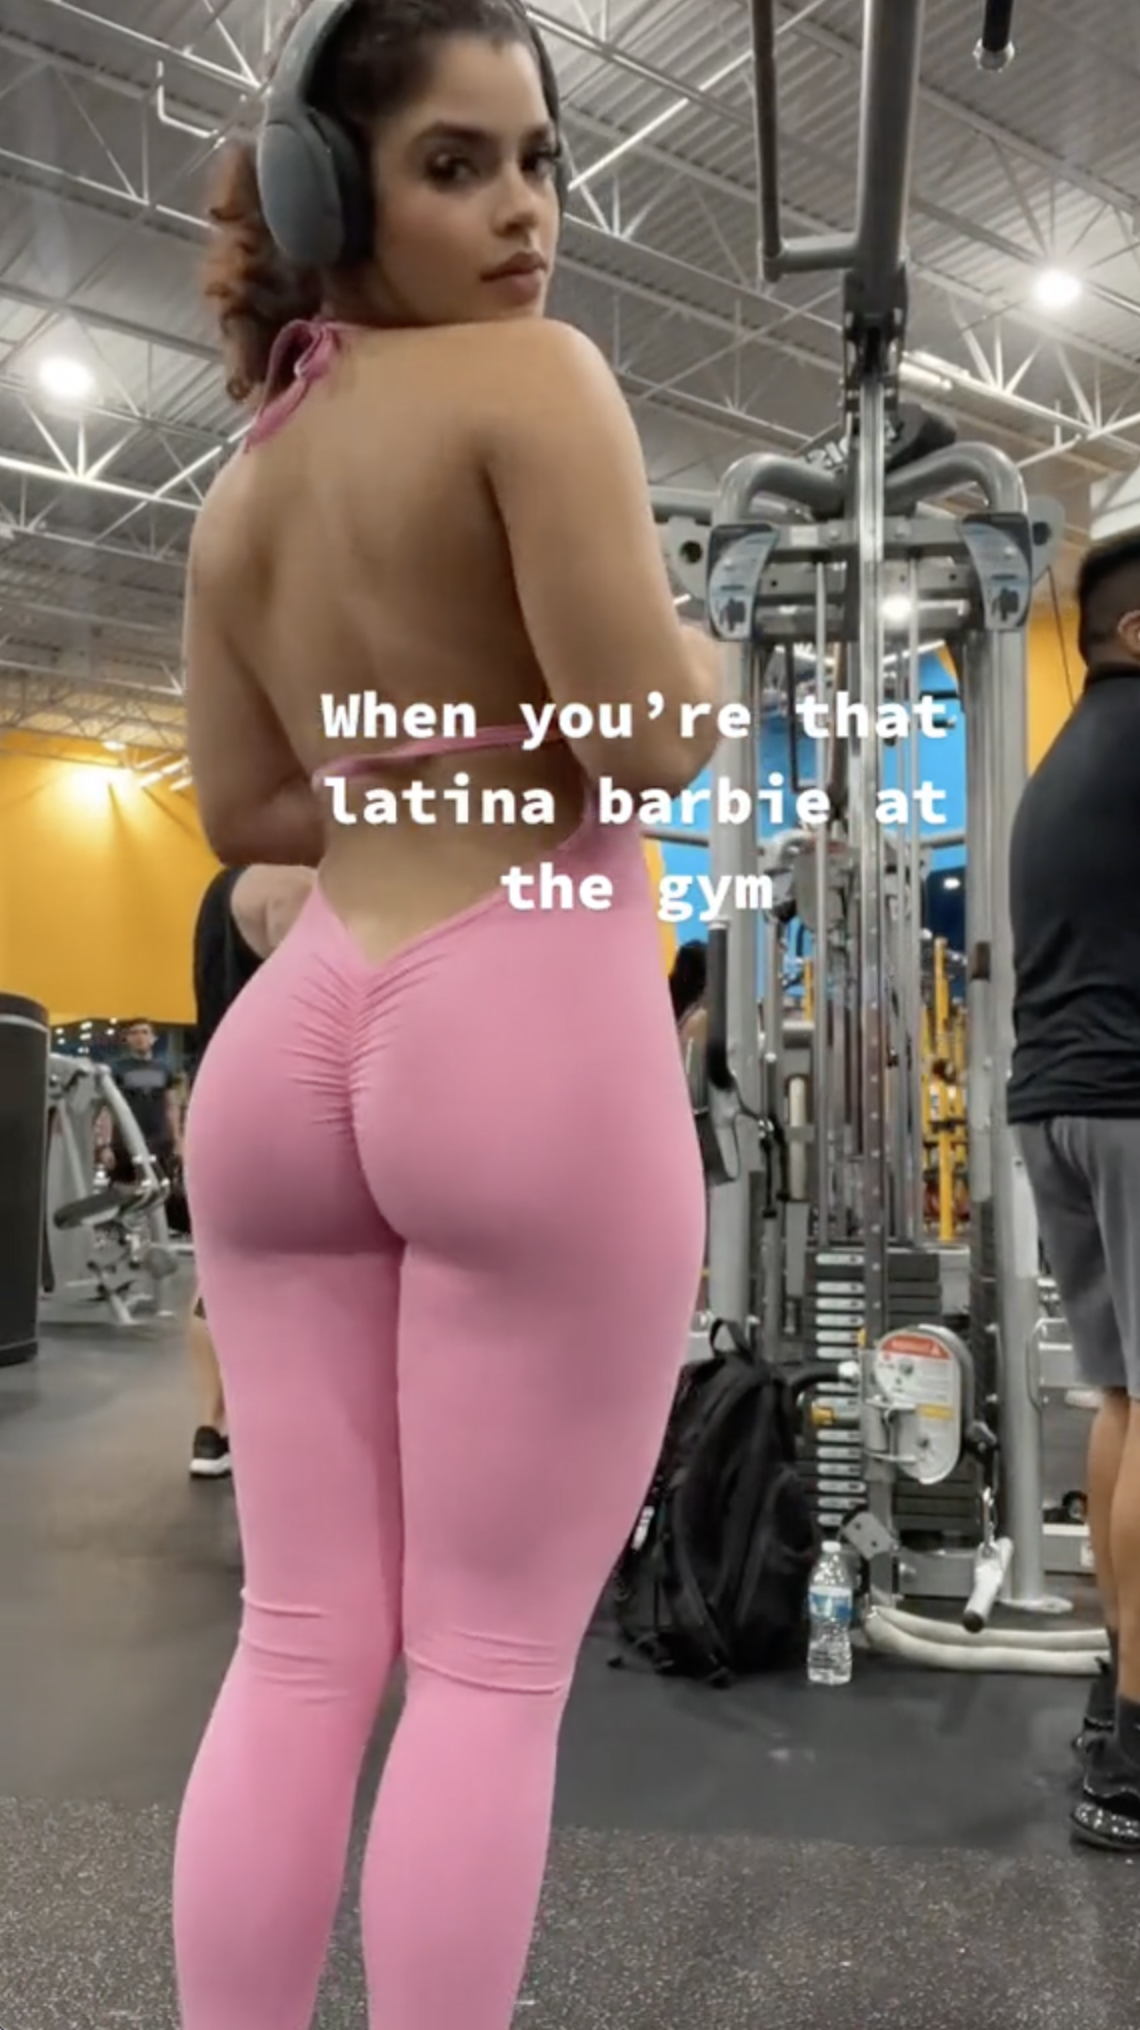 alex lakeman recommends hot big ass latina pic